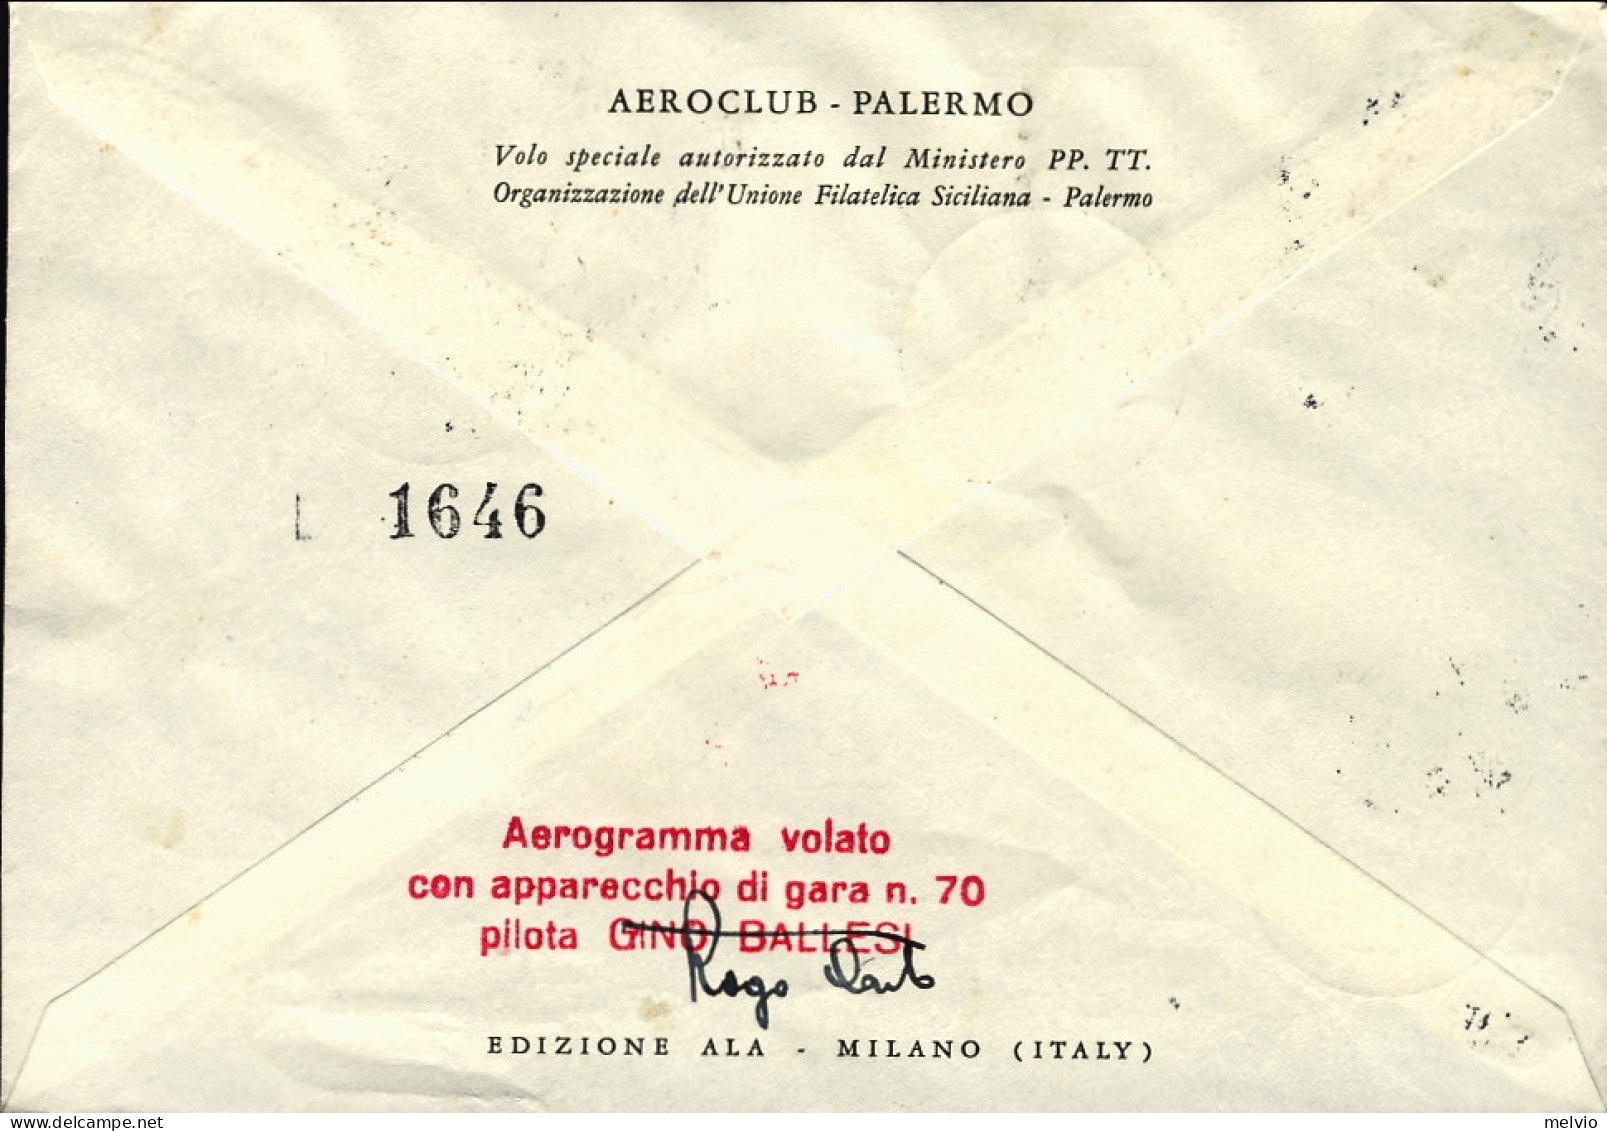 San Marino-1956 Cat.Pellegrini N.680 Euro80, 8^ Giro Aereo Internaz. Sicilia+vig - Airmail